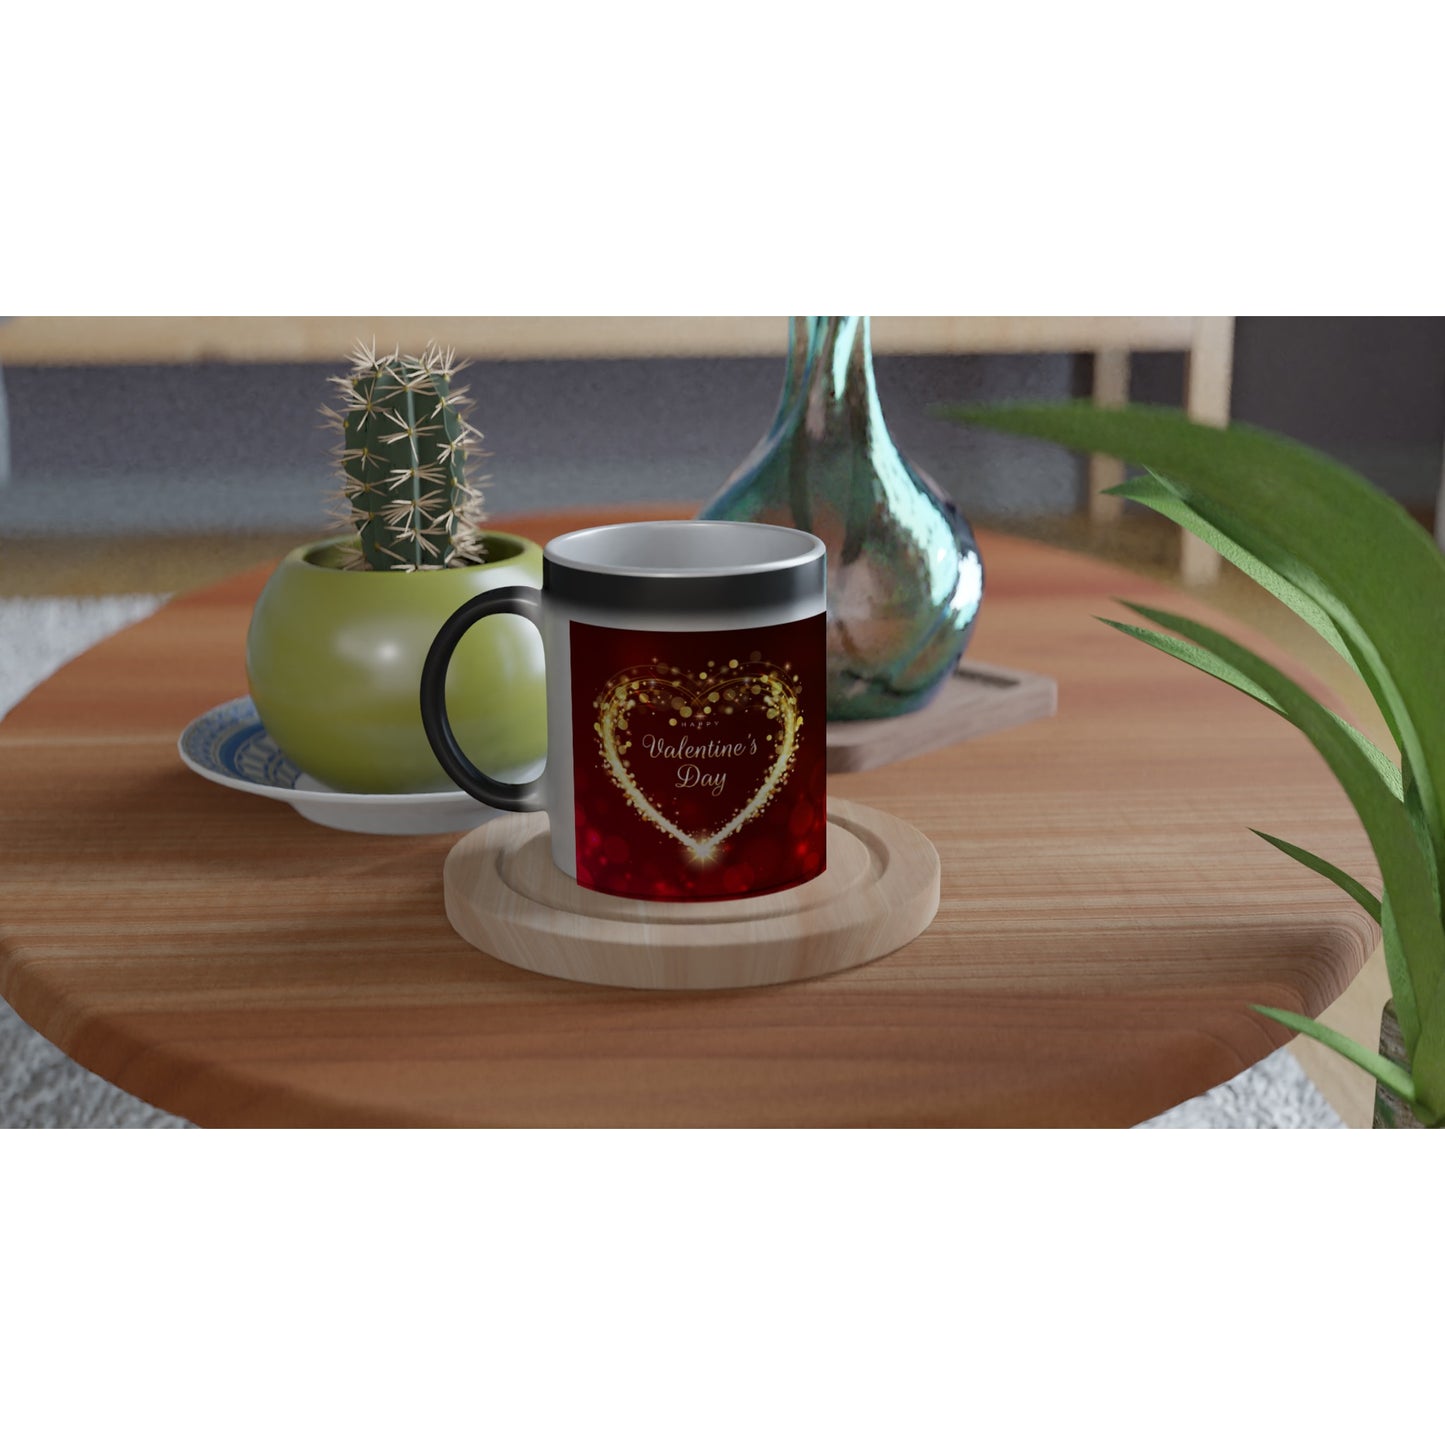 Magic 11oz Ceramic Mug "Happy Valentine's Day"